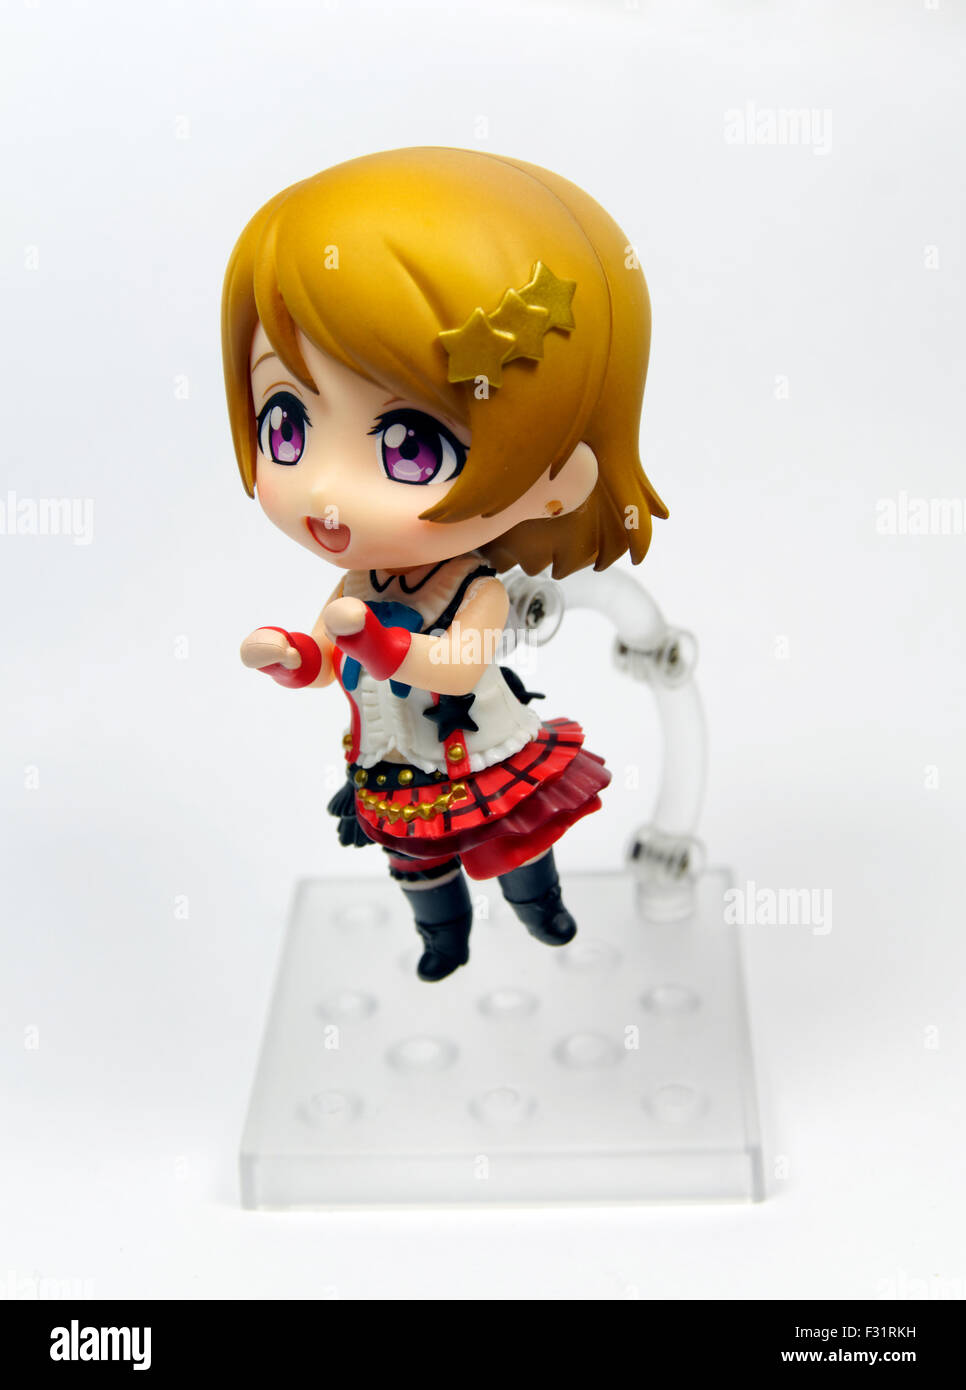 Koizumi Hanayo, Japanese character doll. Stock Photo